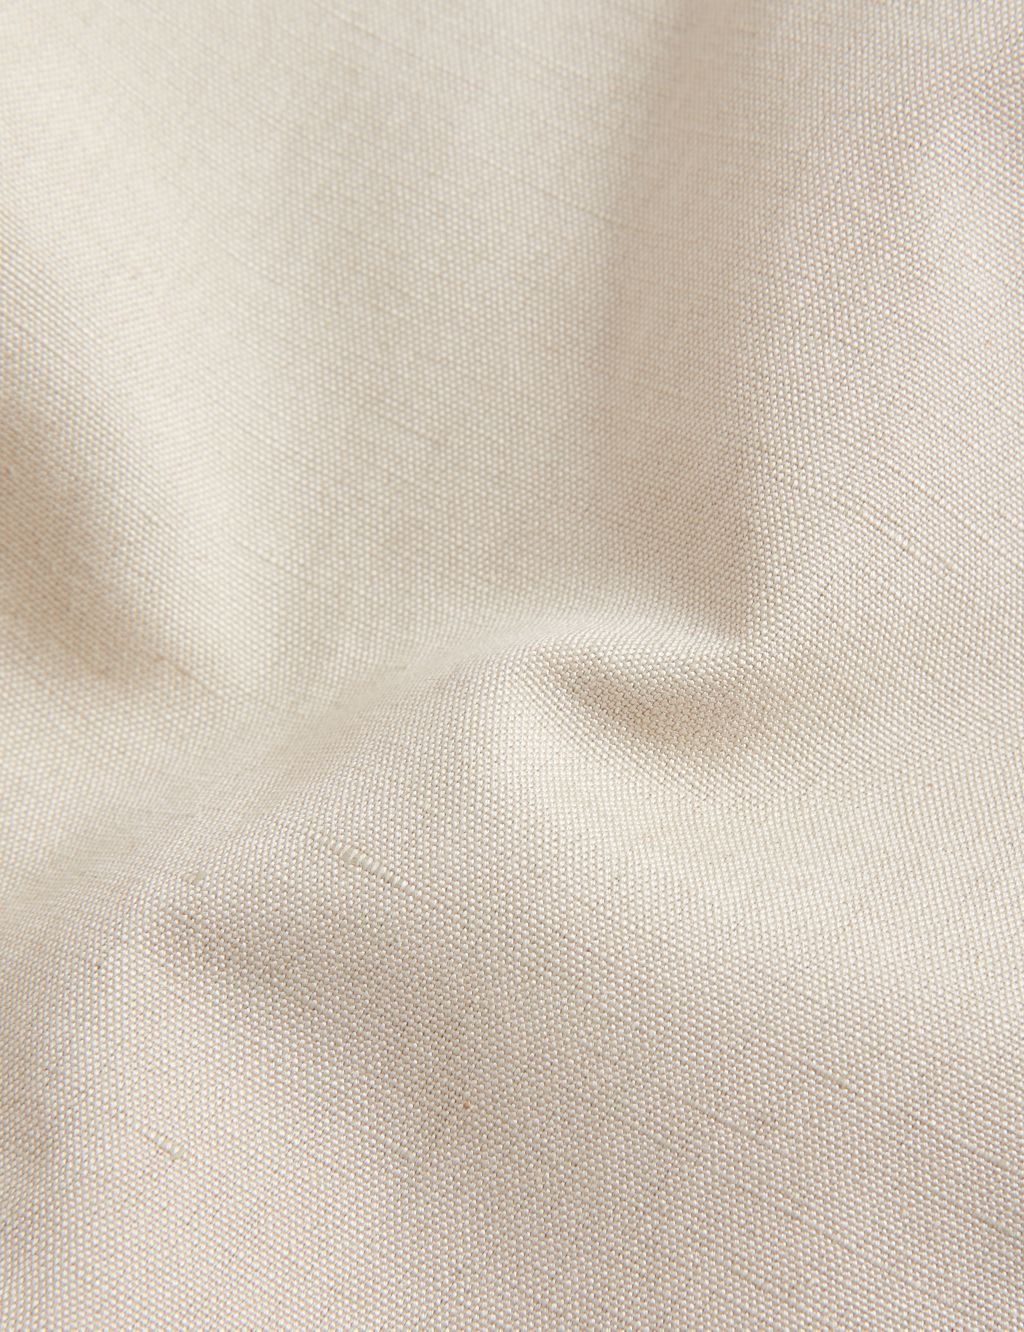 Slim Fit Italian Silk And Linen Jacket image 5